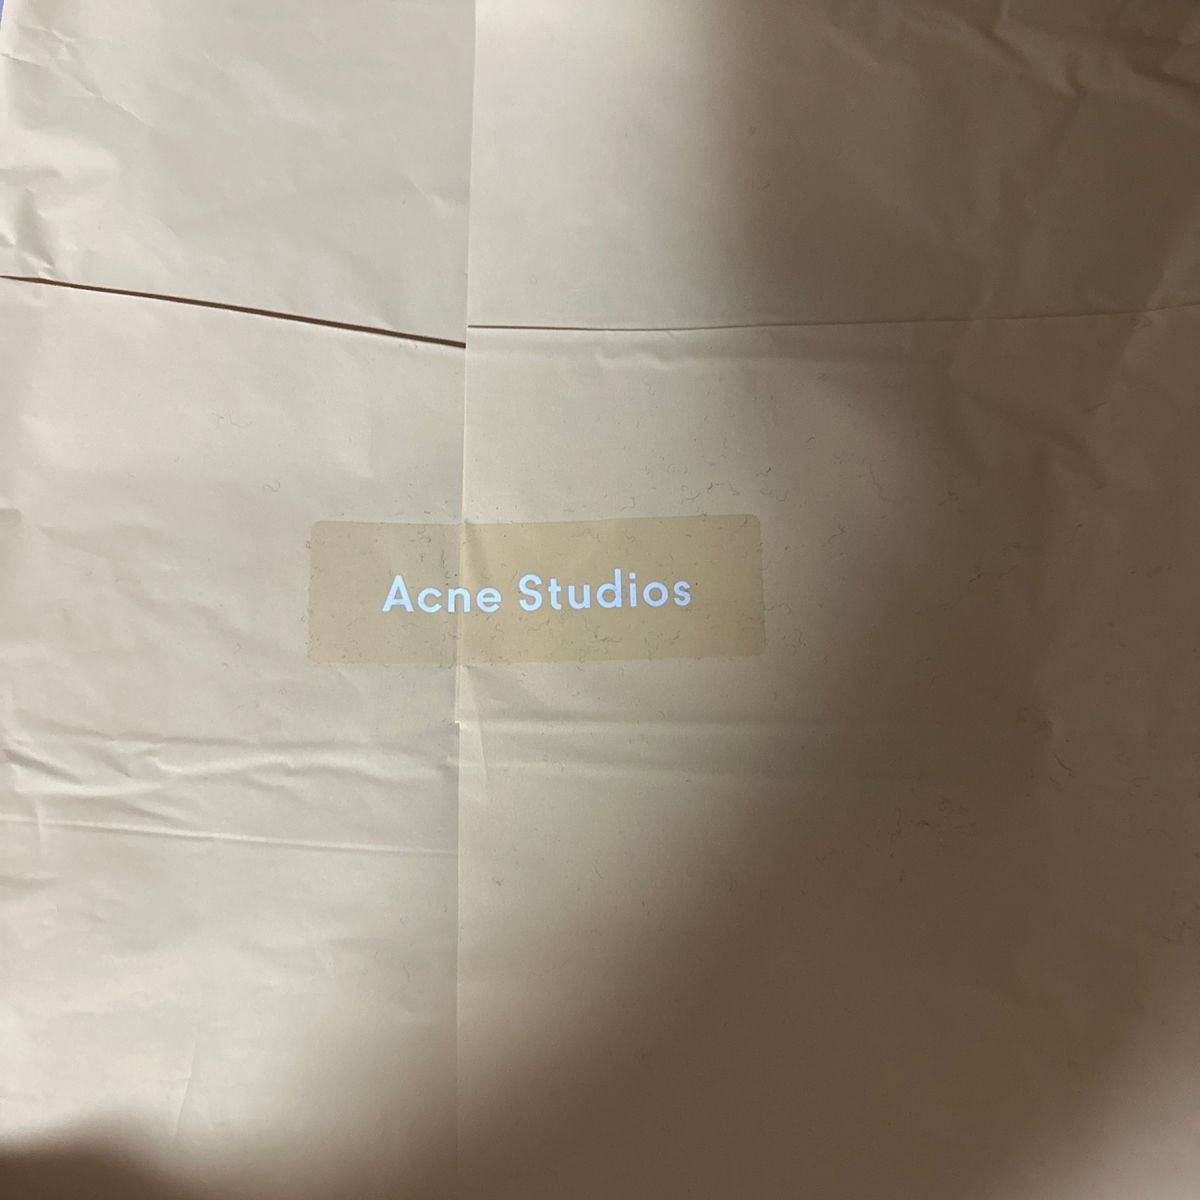 Acne Studios canada stole